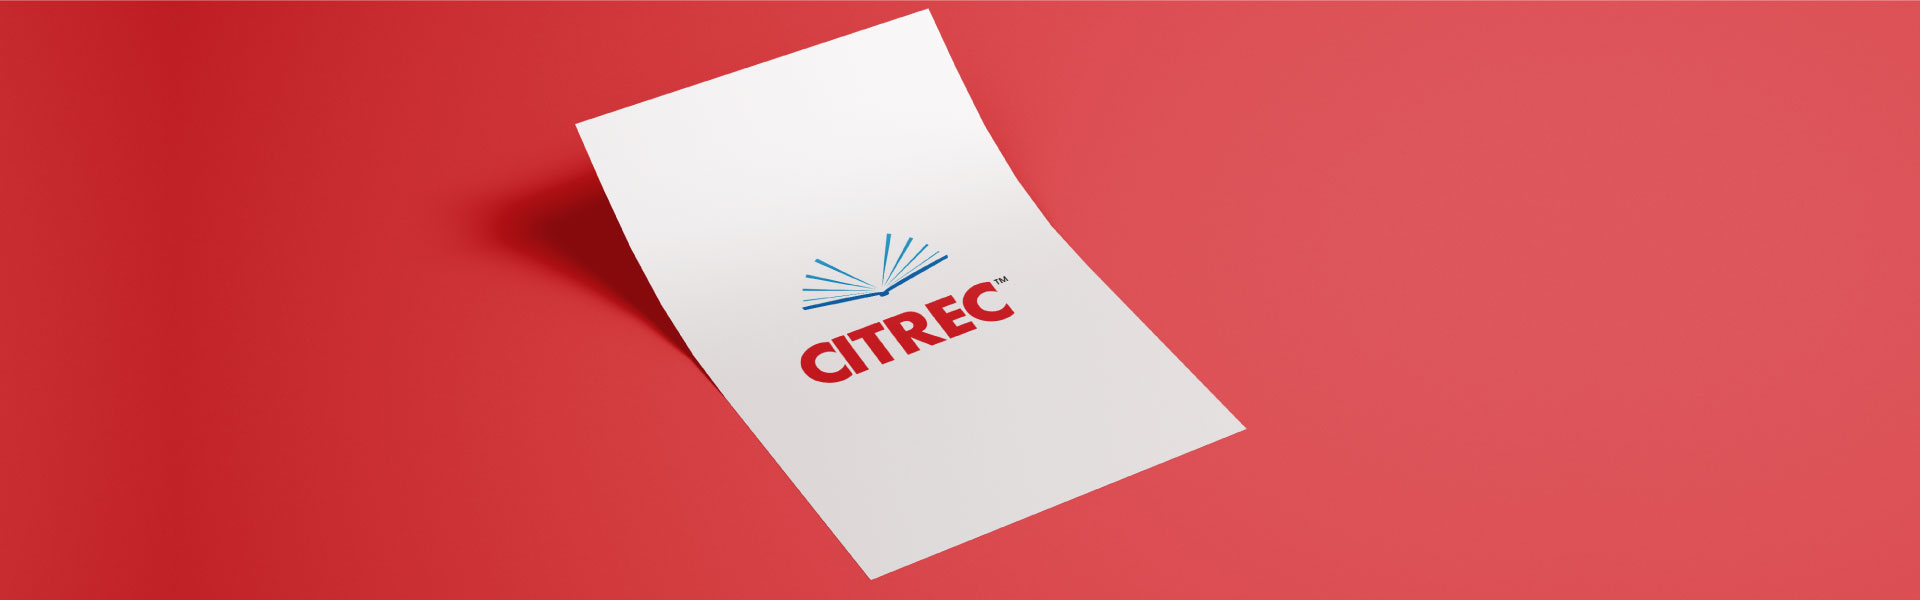 citrec-brand-logo-design-by-mapleweb-vancouver-canada-header-image